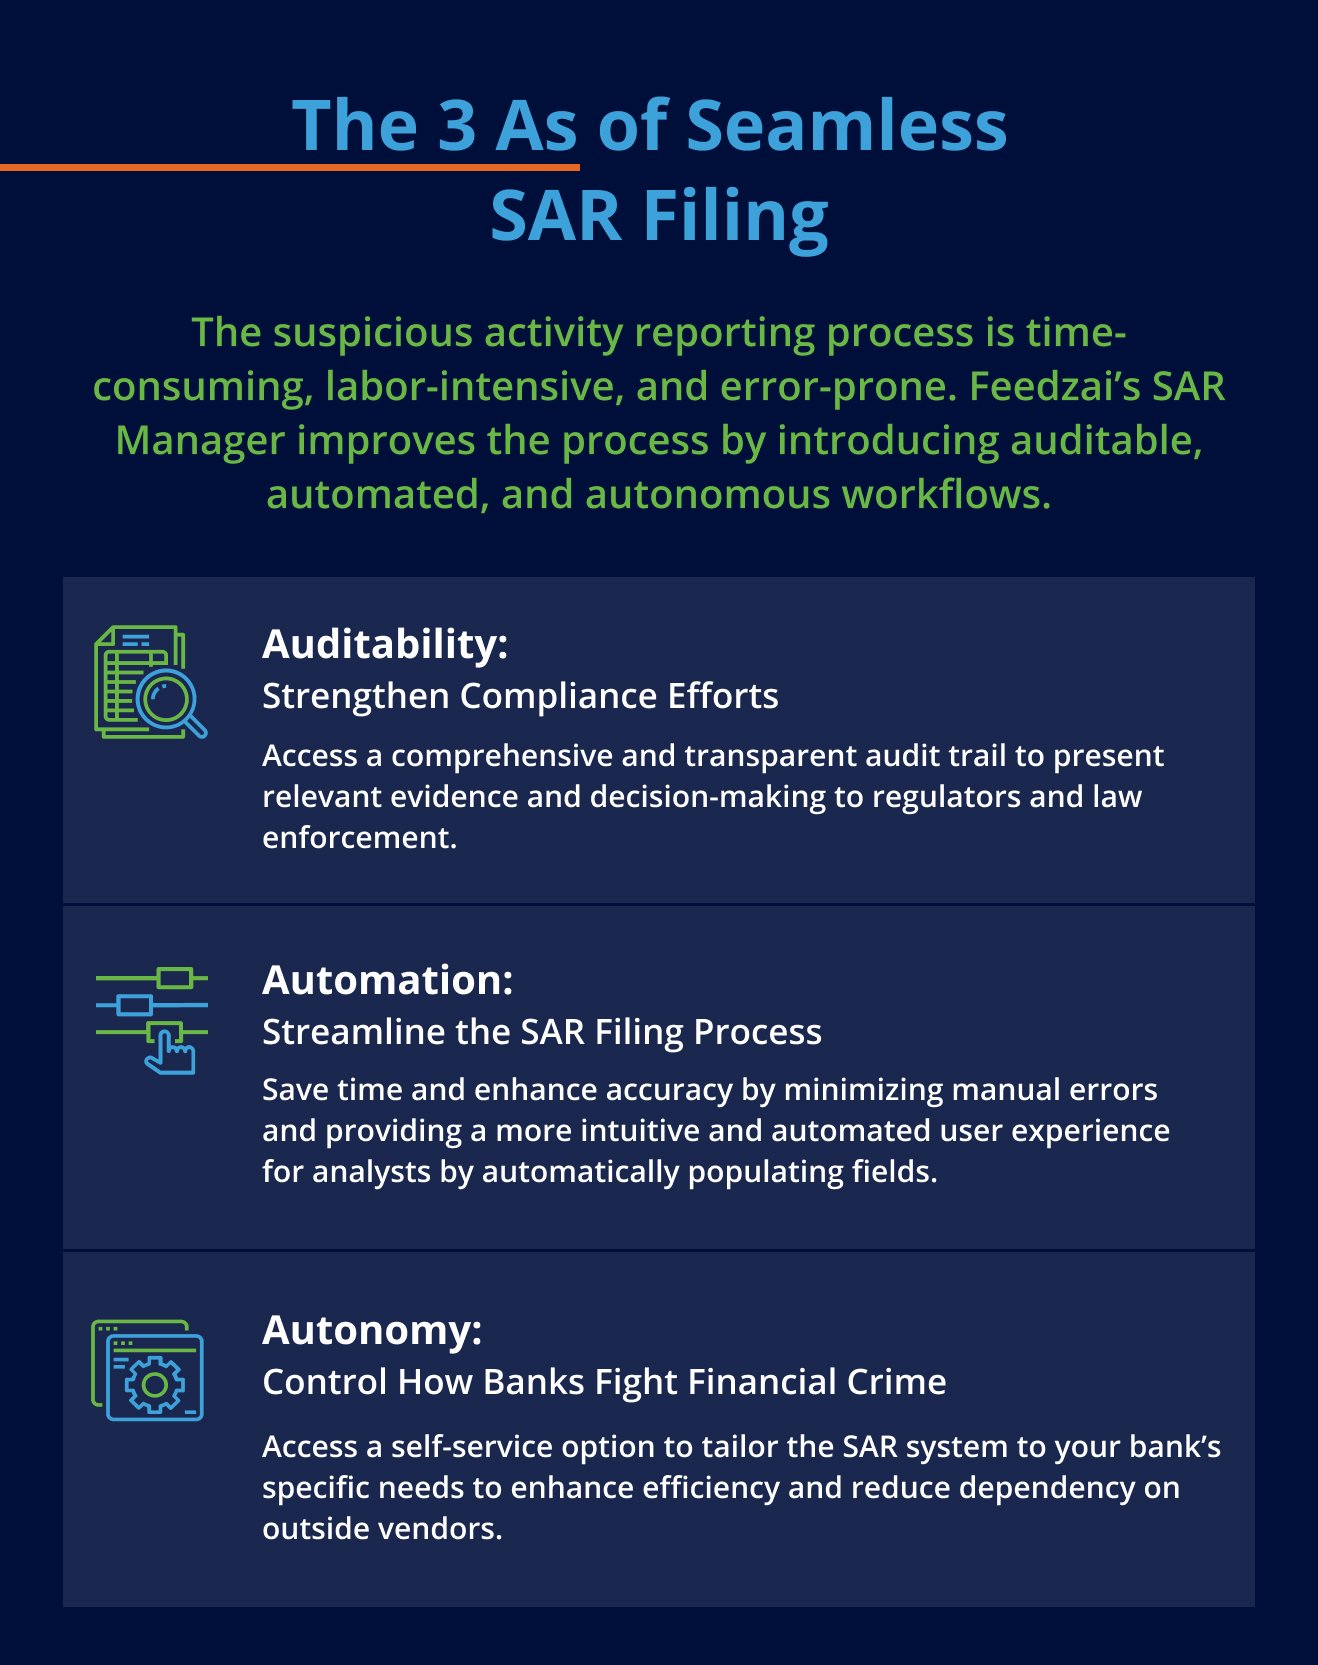 Text: The 3 As of Seamless SAR Filing: Auditability, Automation, Autonomy